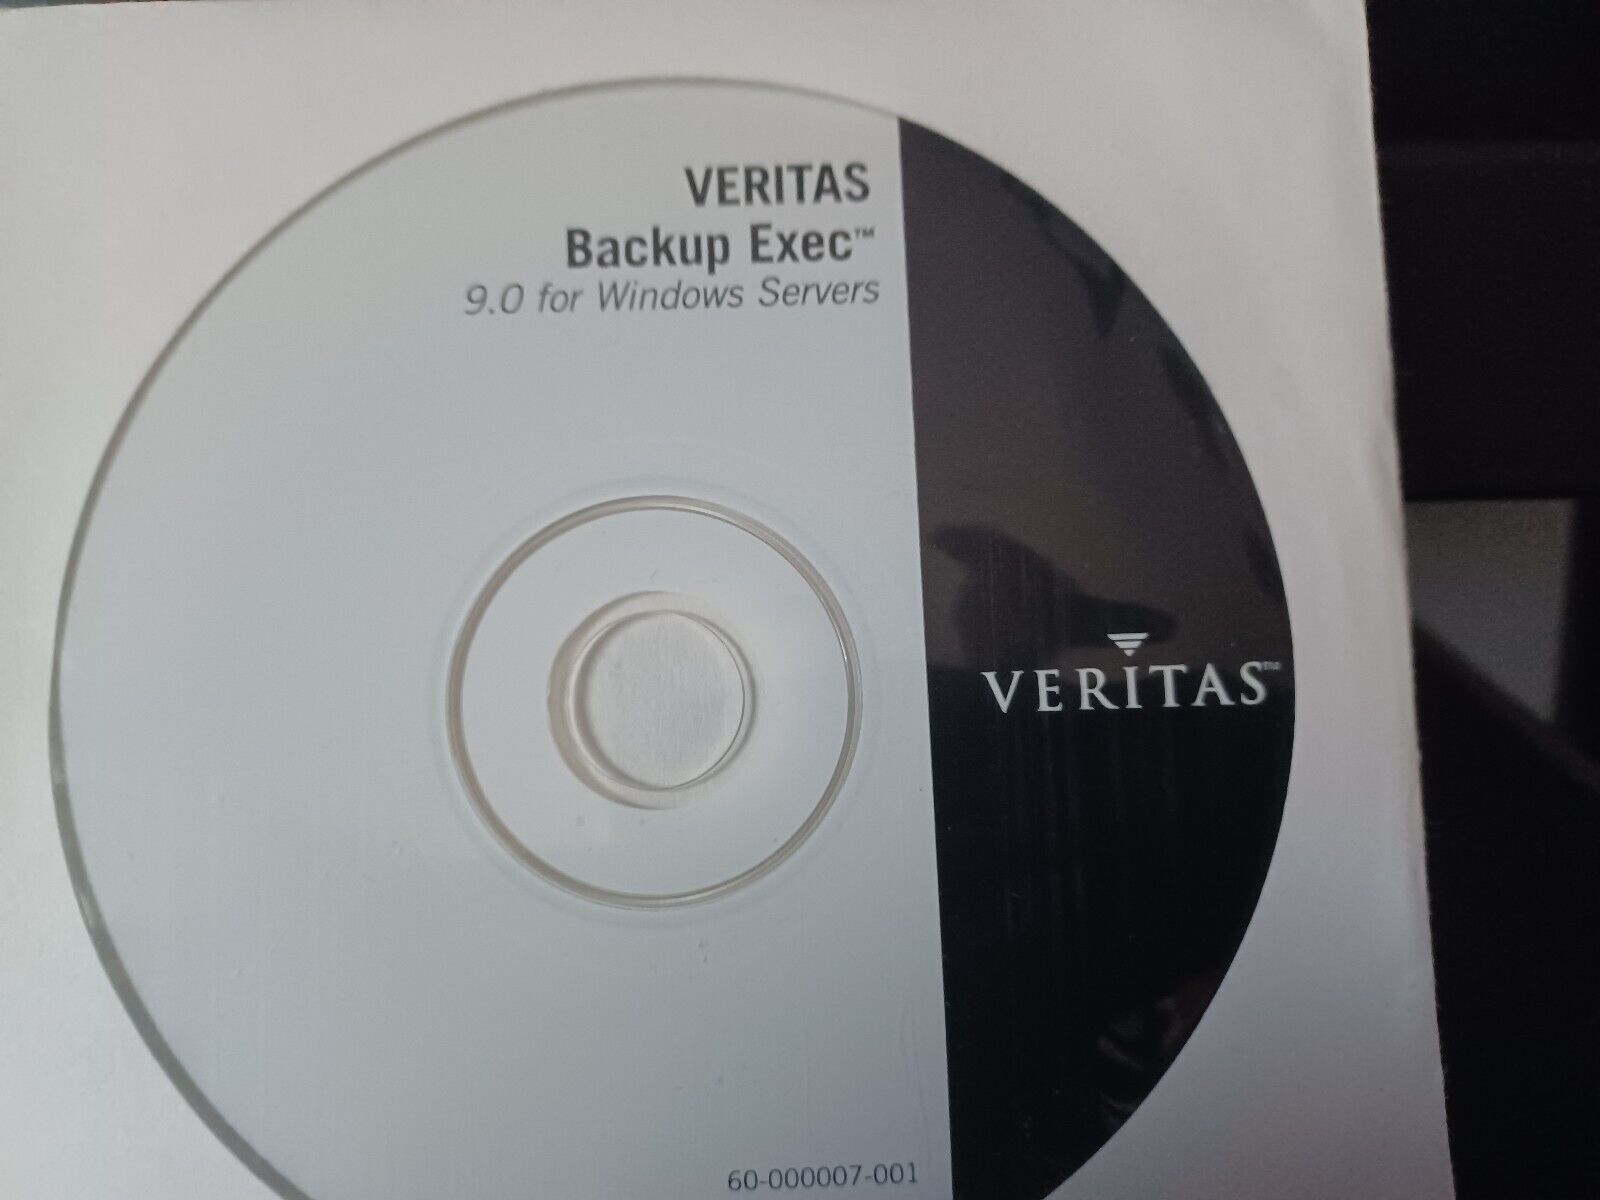 Veritas Backup Exec 9.0 for Windows Servers